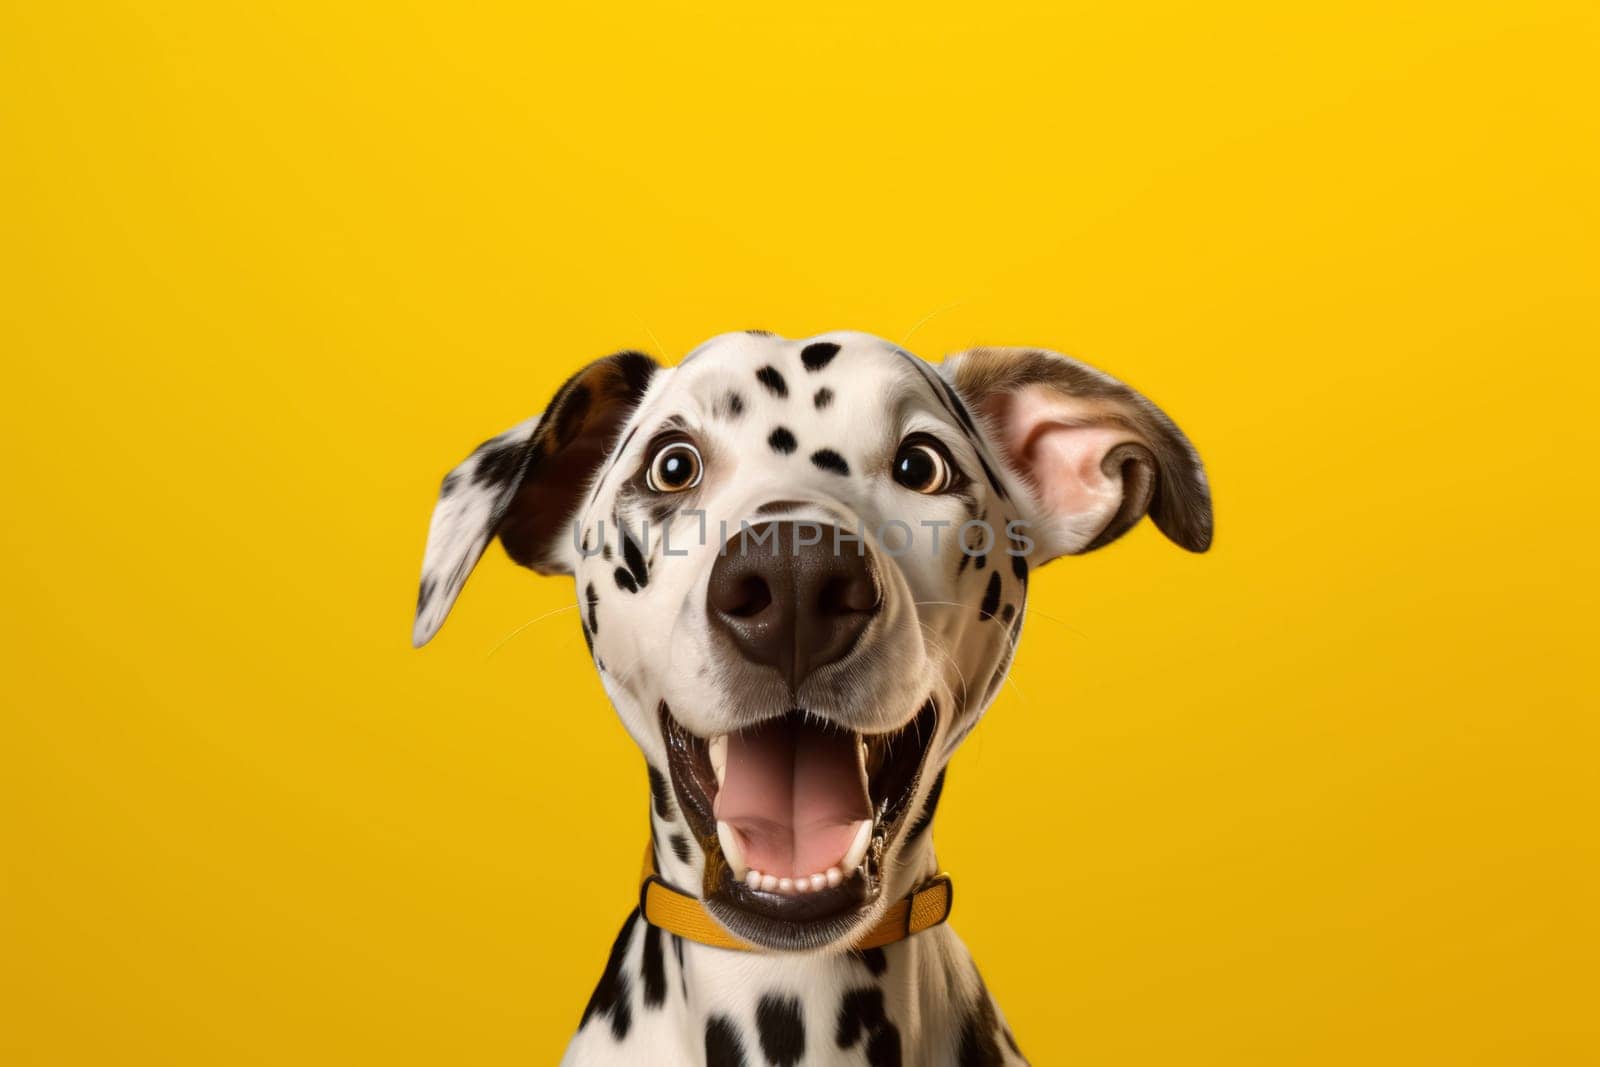 Cheerful Dalmatian Dog on Yellow by andreyz